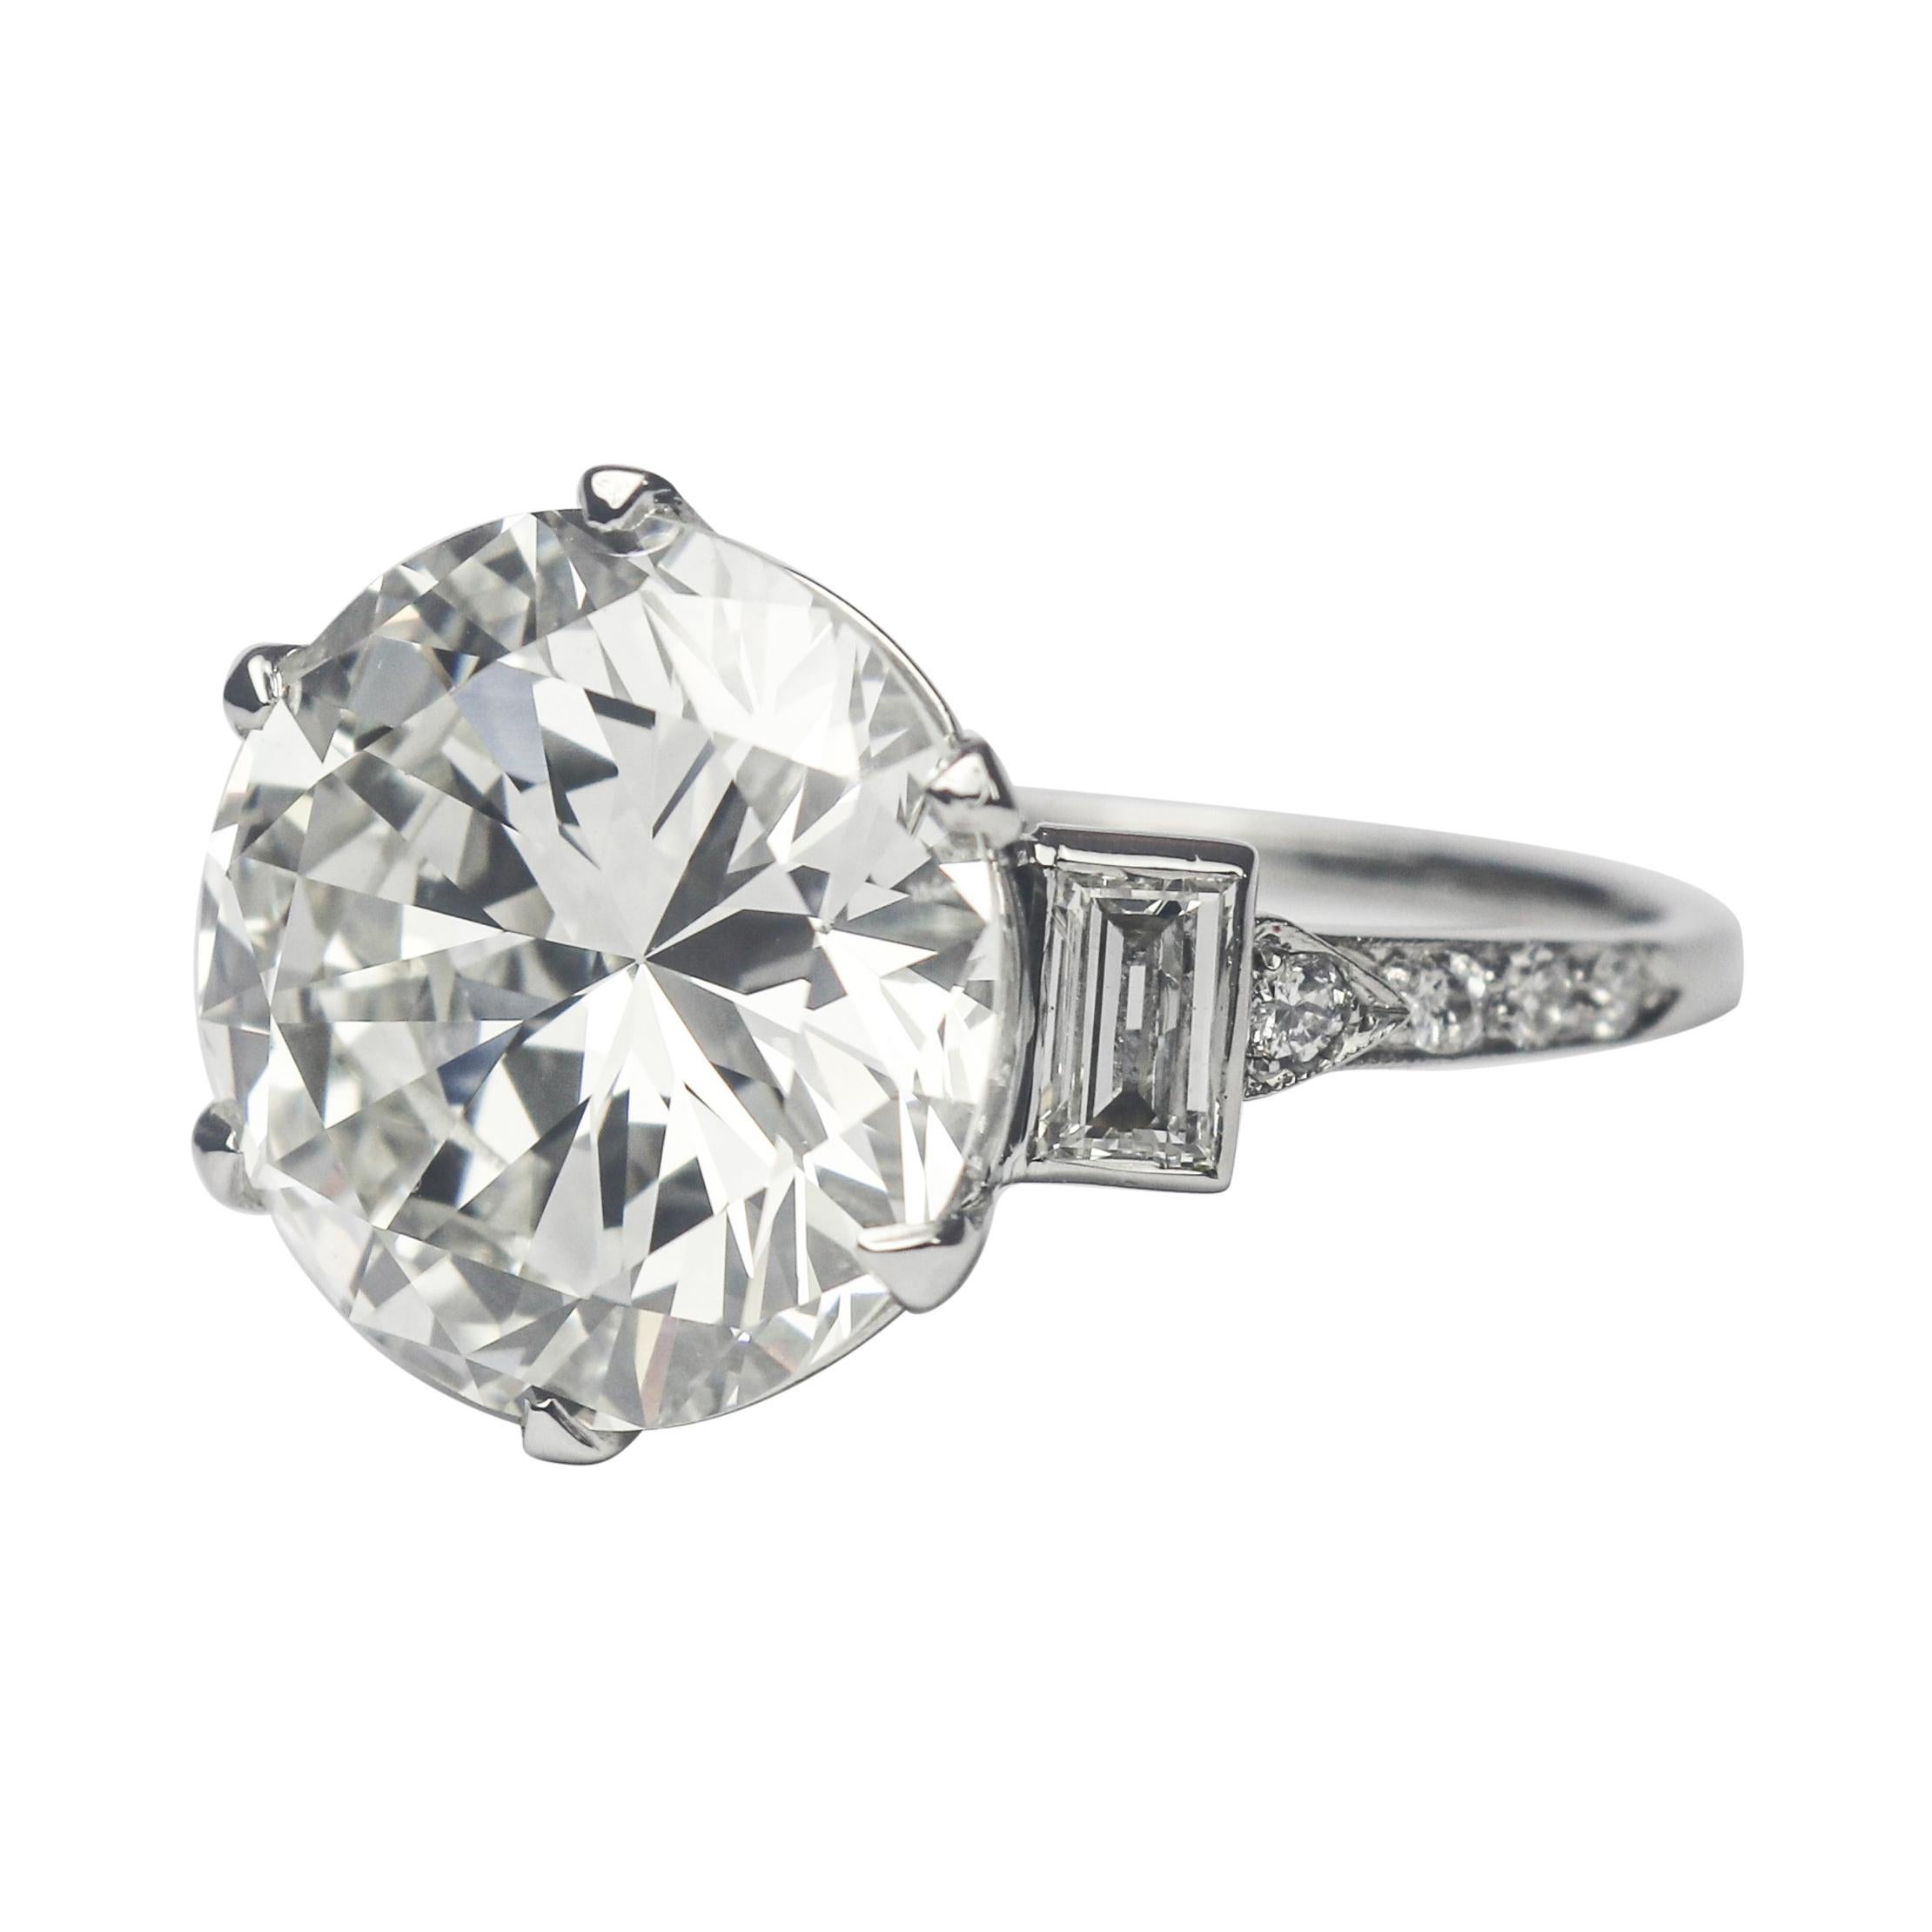 GIA Certified 7.82 Carat Round Brilliant Cut Diamond Art Deco Style Ring